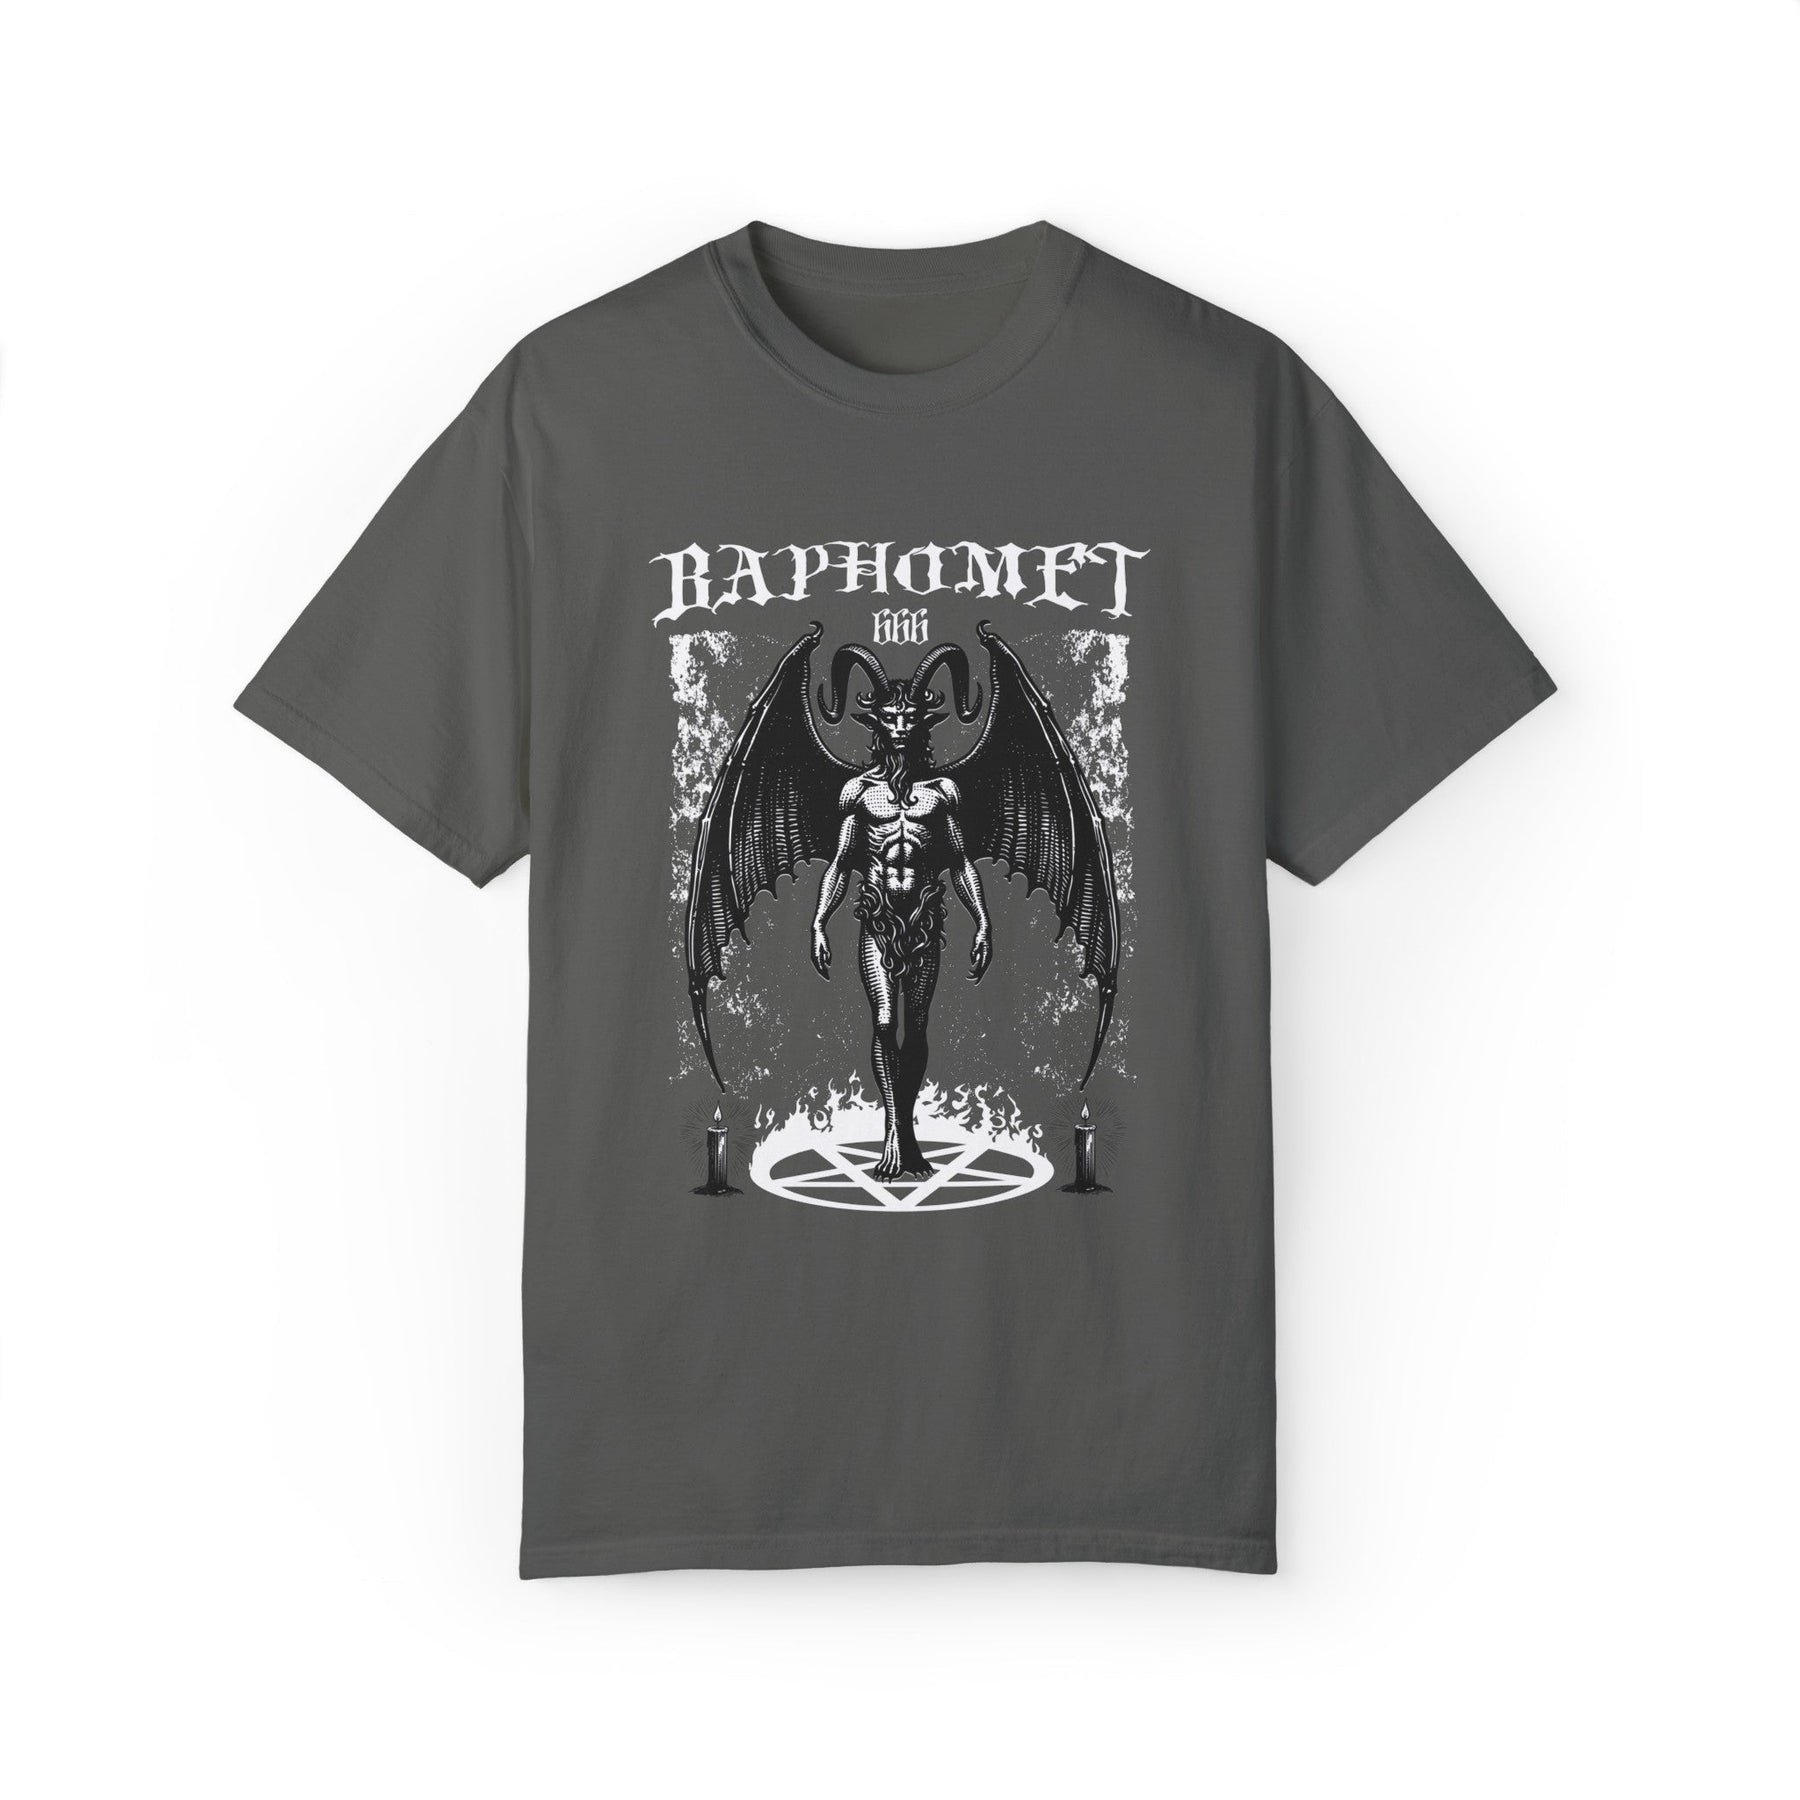 Baphomet Oversized Beefy Tee - Goth Cloth Co.T - Shirt60793367359012575748